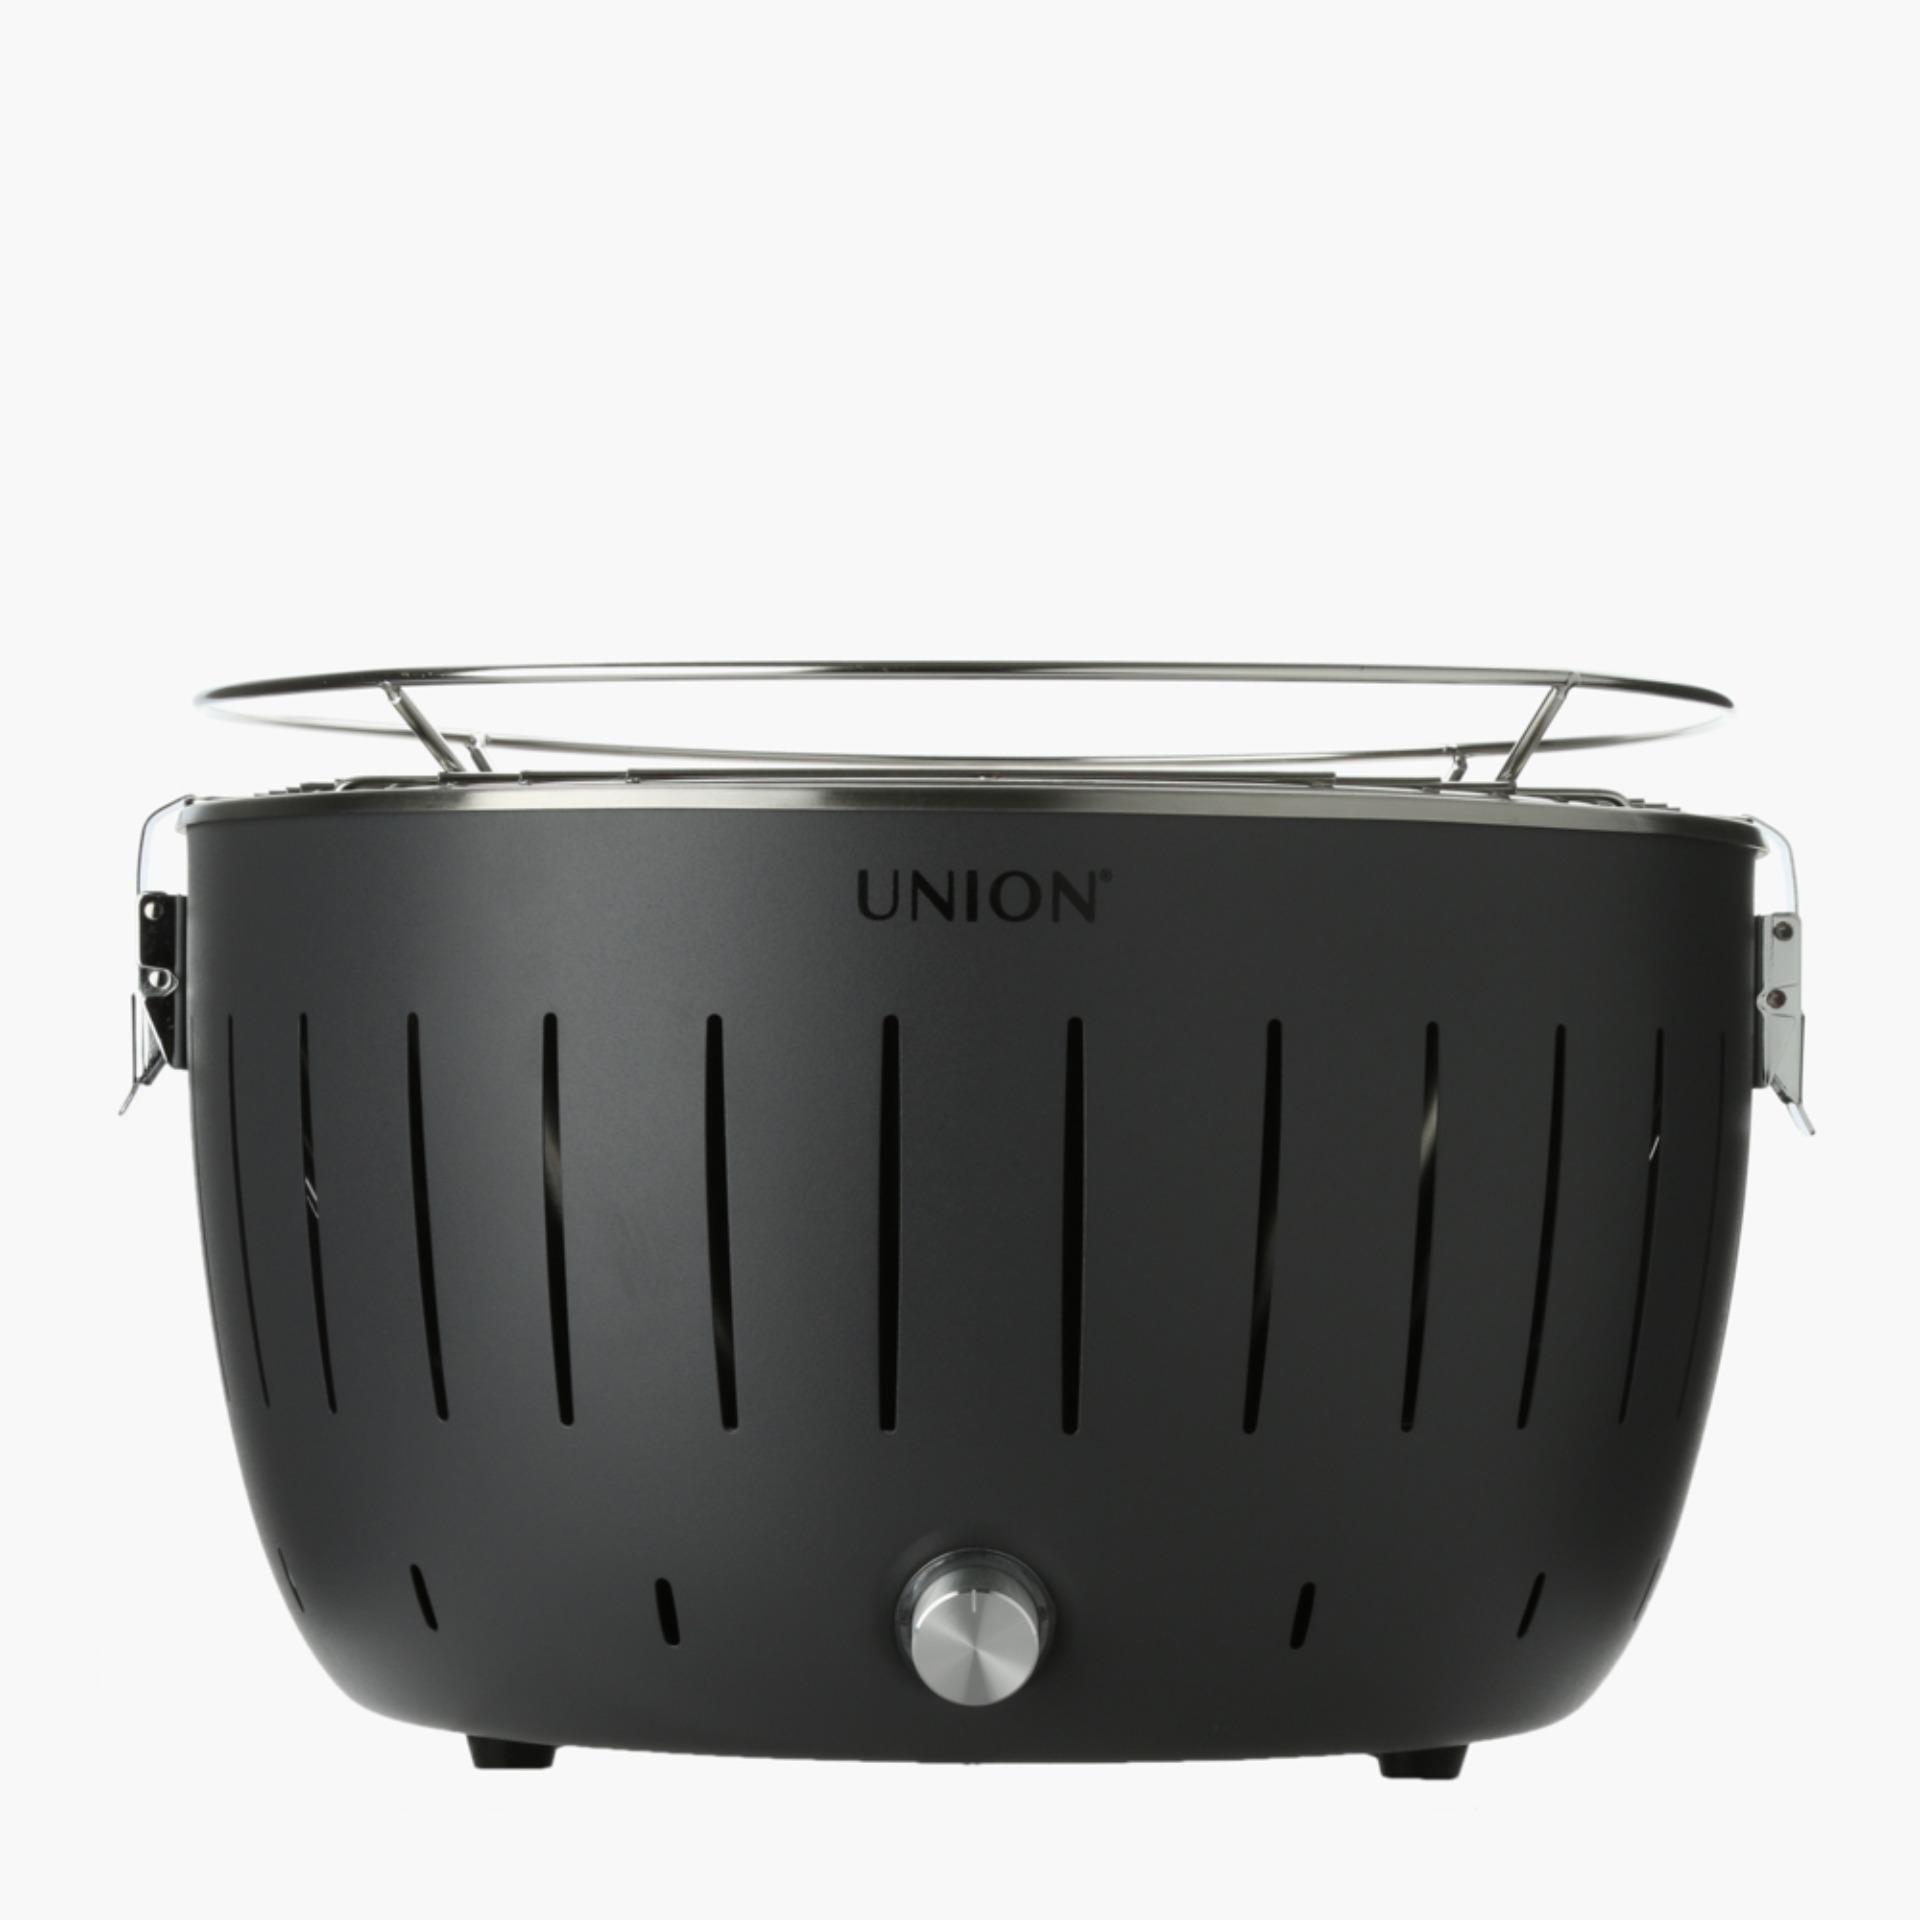 Union Ugcc 101 Smokeless Charcoal Grill